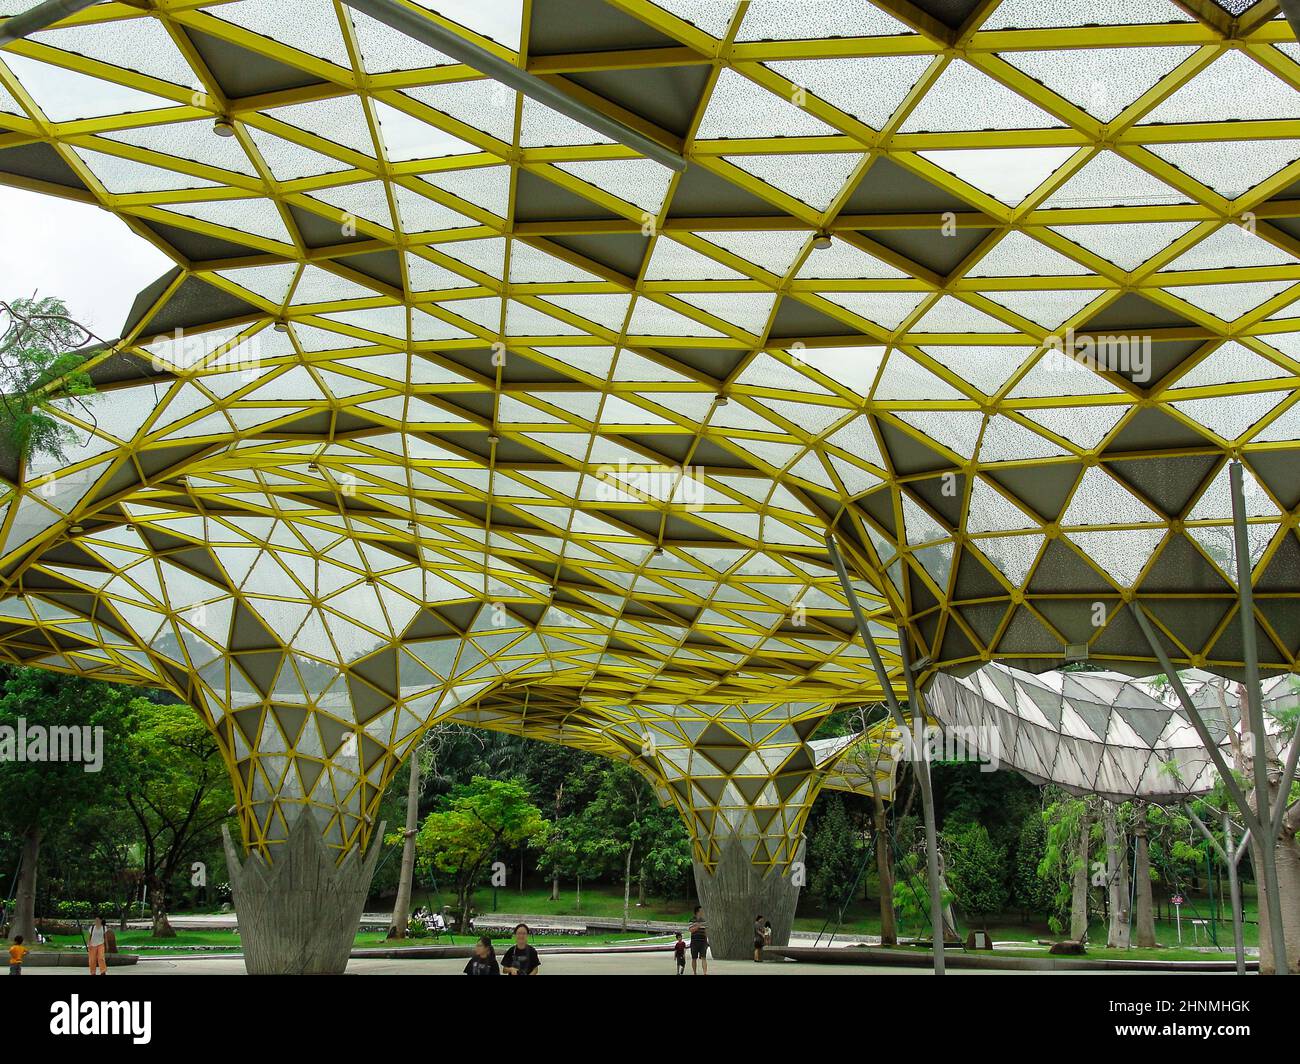 Laman Perdana disign roof in Botanical Garden, KUALA LUMPUR, MALAYSIA Stock Photo